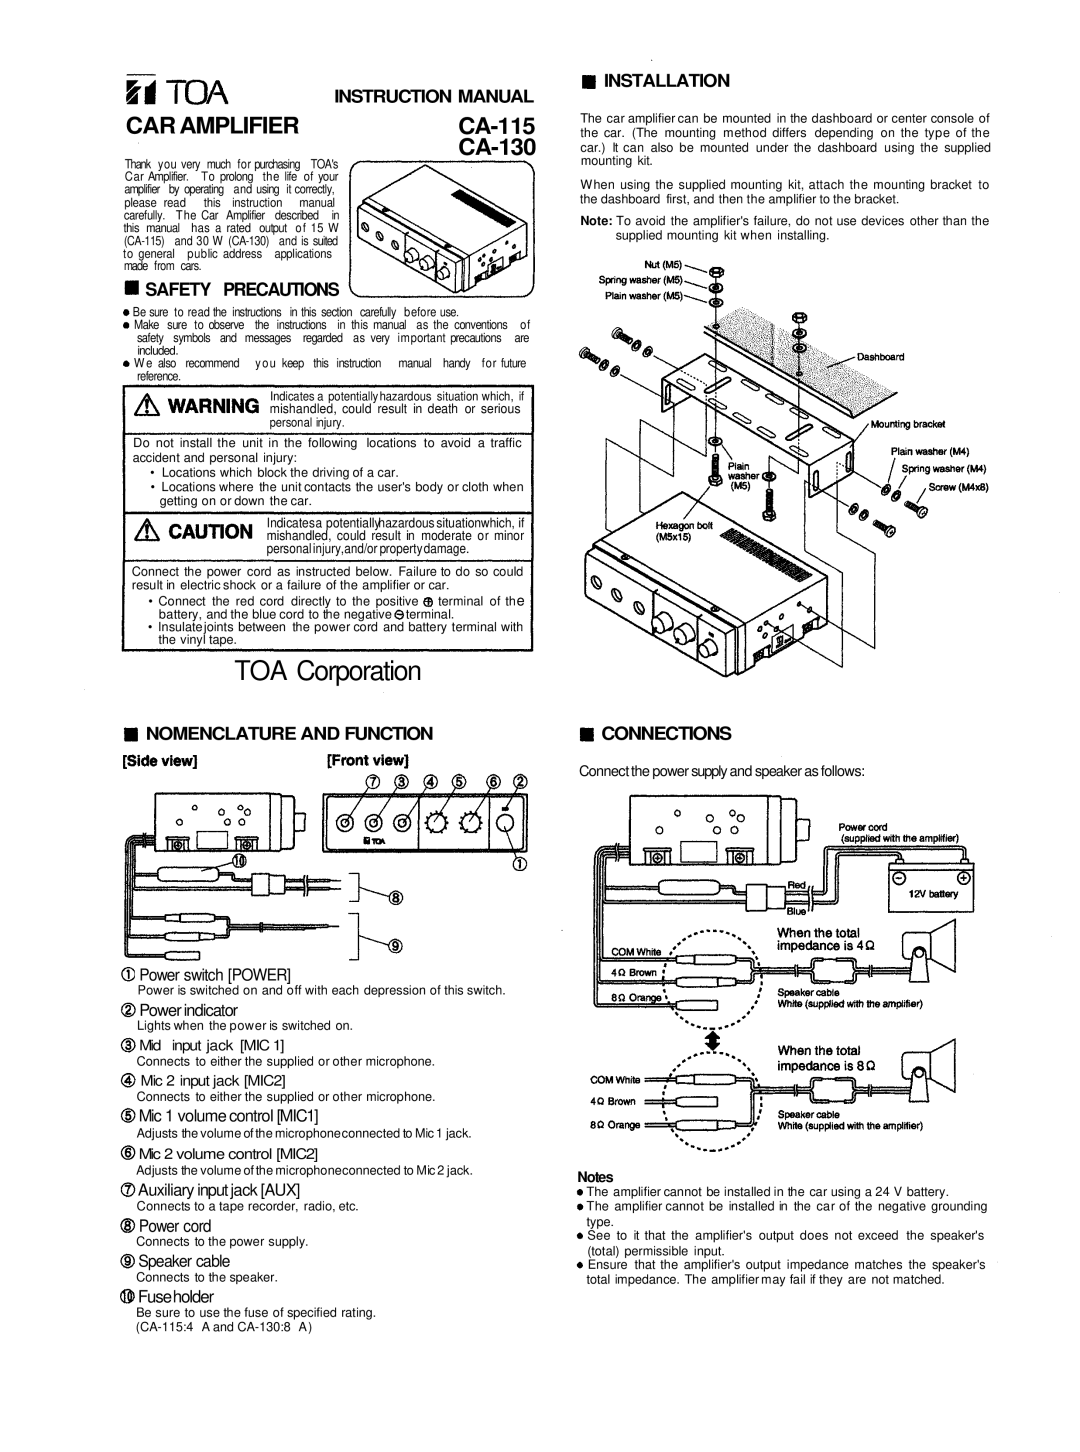 Vizio CA-115 instruction manual Instruction Manual, Safety Precautions, Nomenclature And Function, Installation 